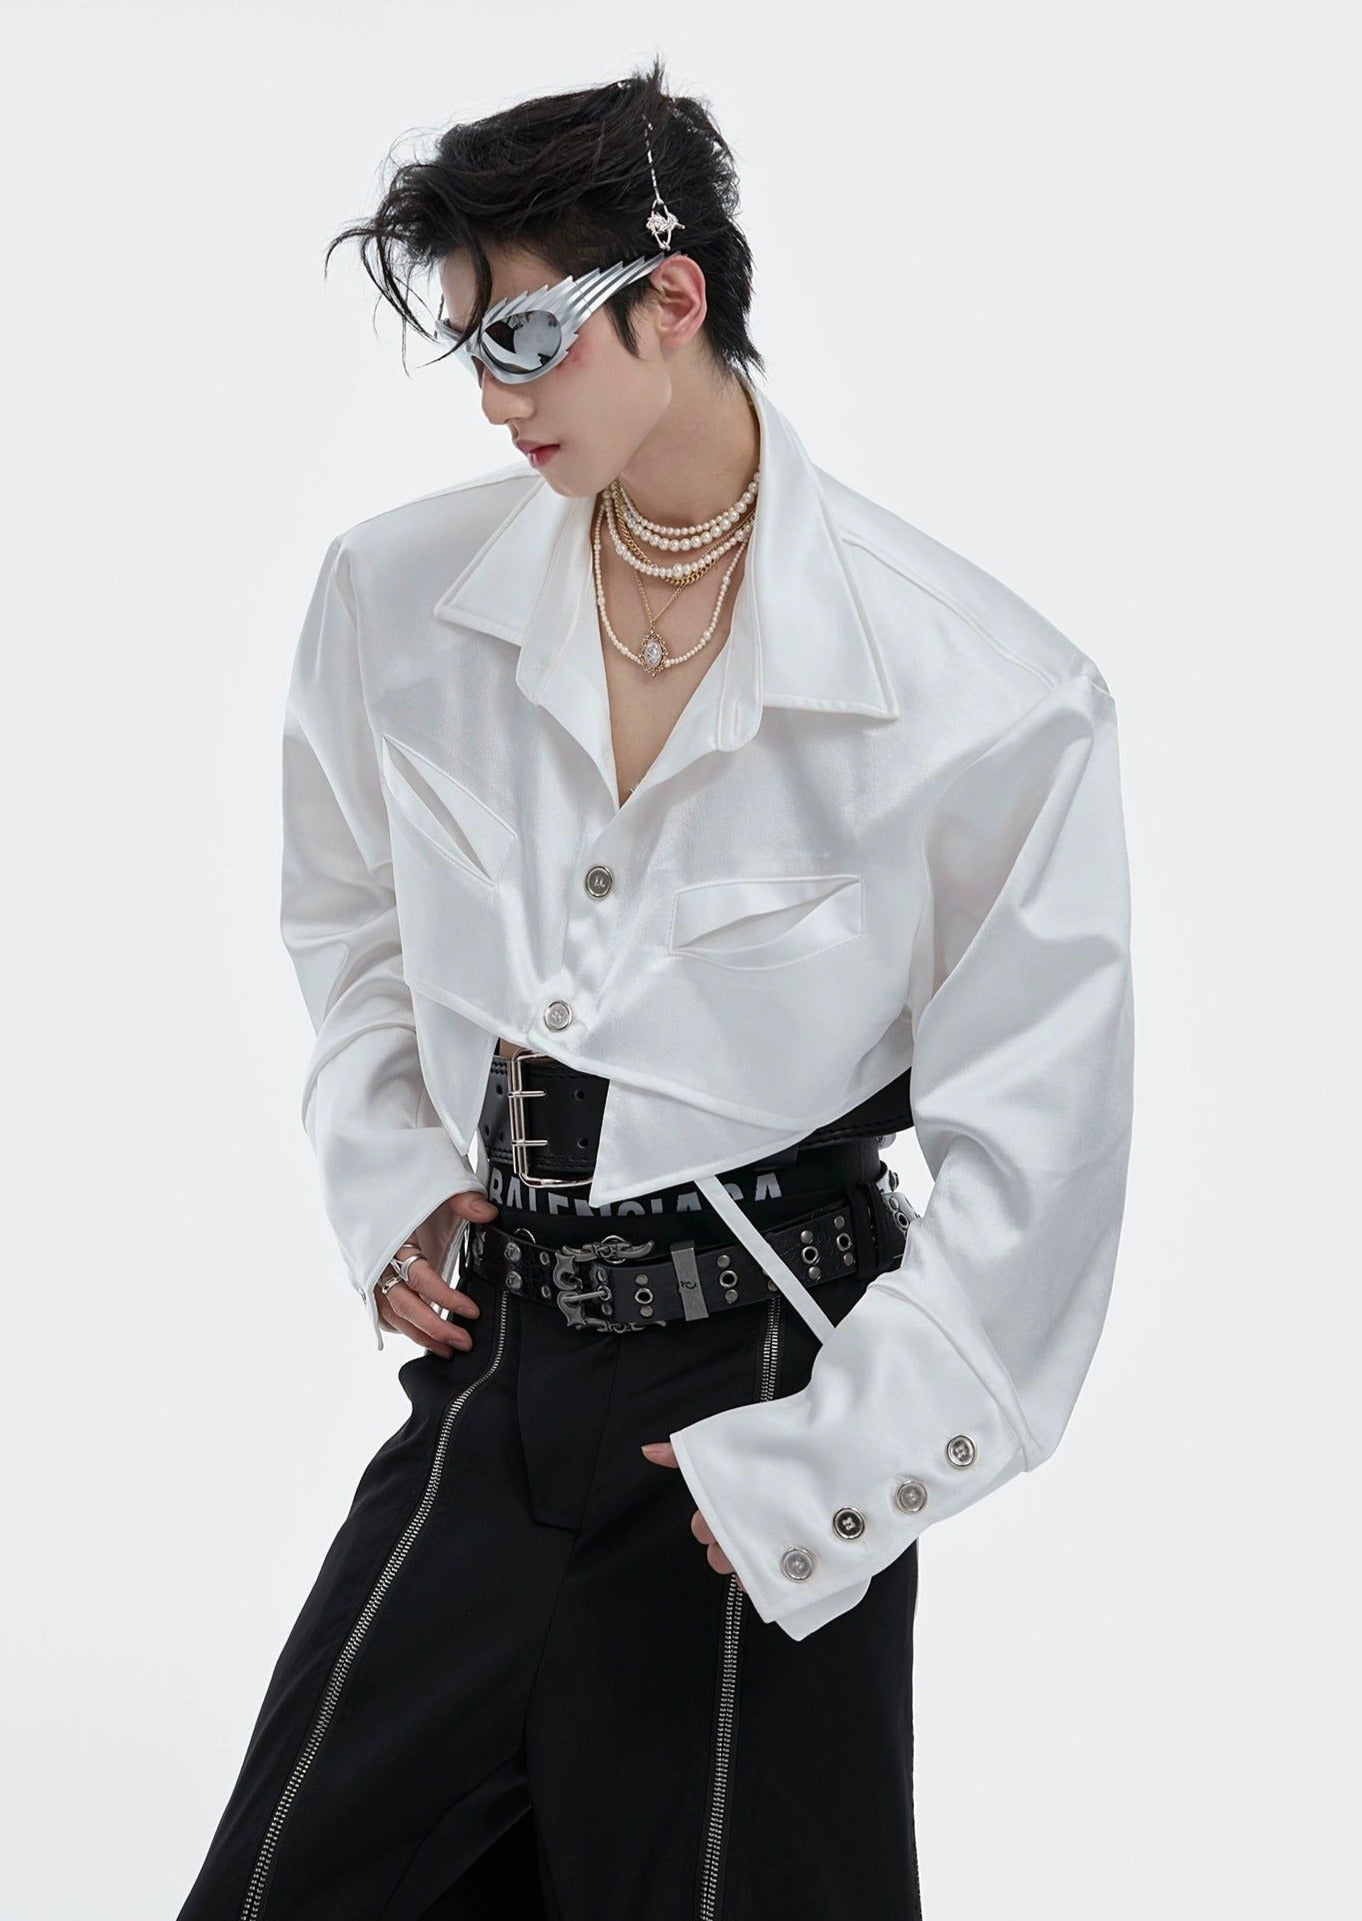 Cropped Multi-Button Flannel Shirt Korean Street Fashion Shirt By Argue Culture Shop Online at OH Vault